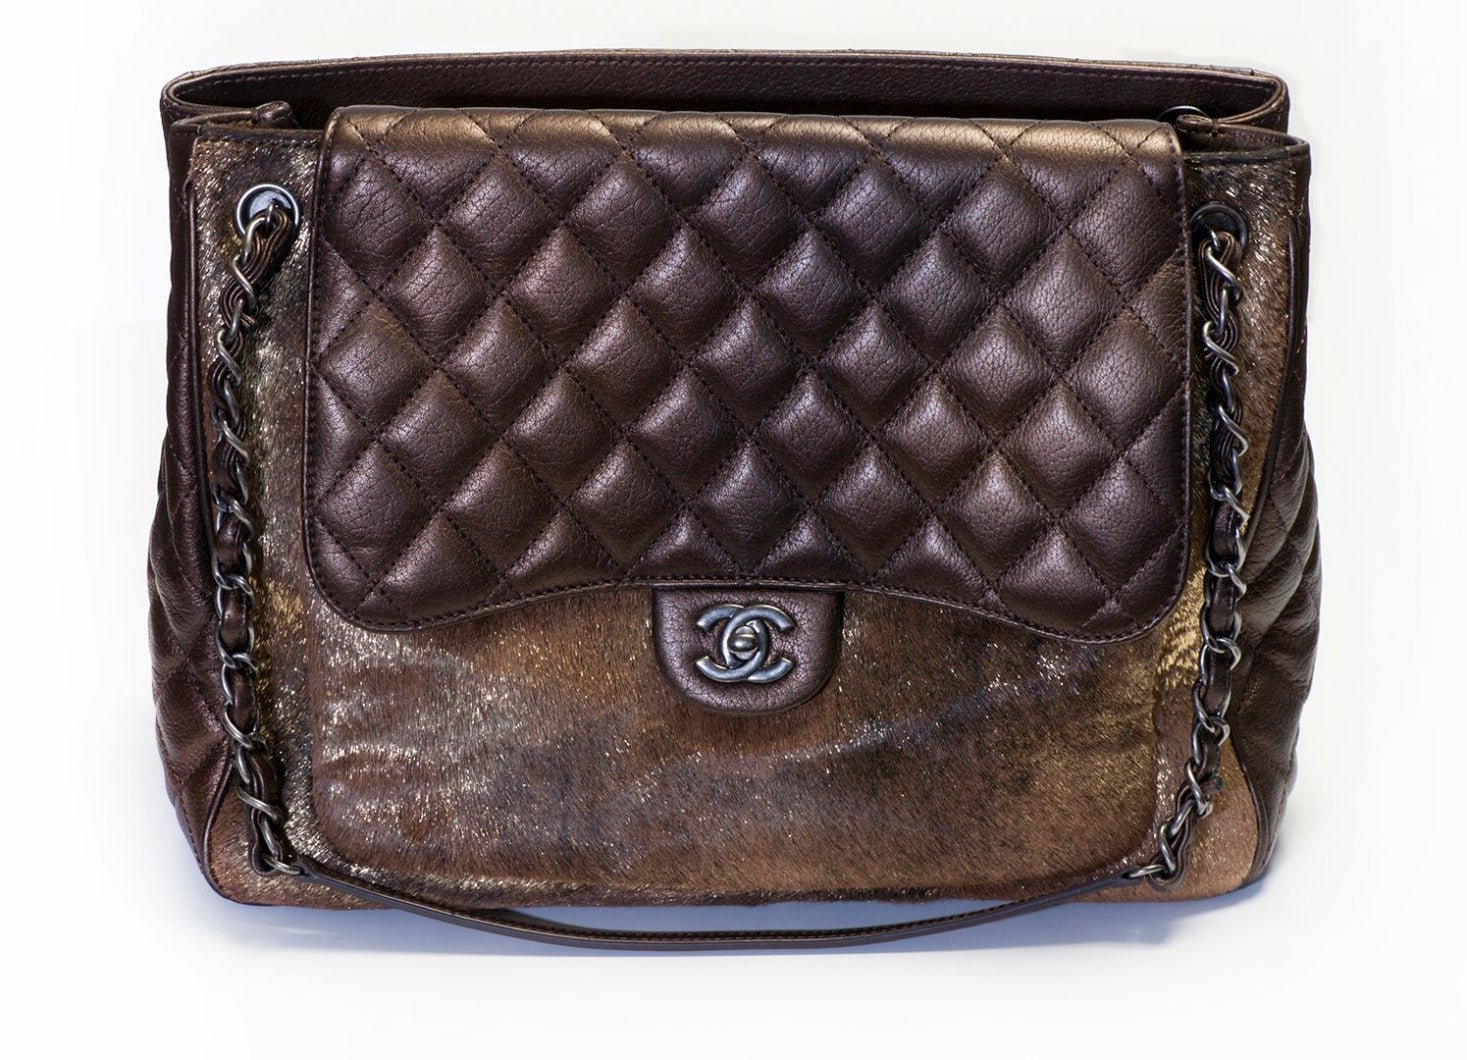 CHANEL Paris 2015 Brown Ombré Quilted Leather Mink Fur Tote Bag